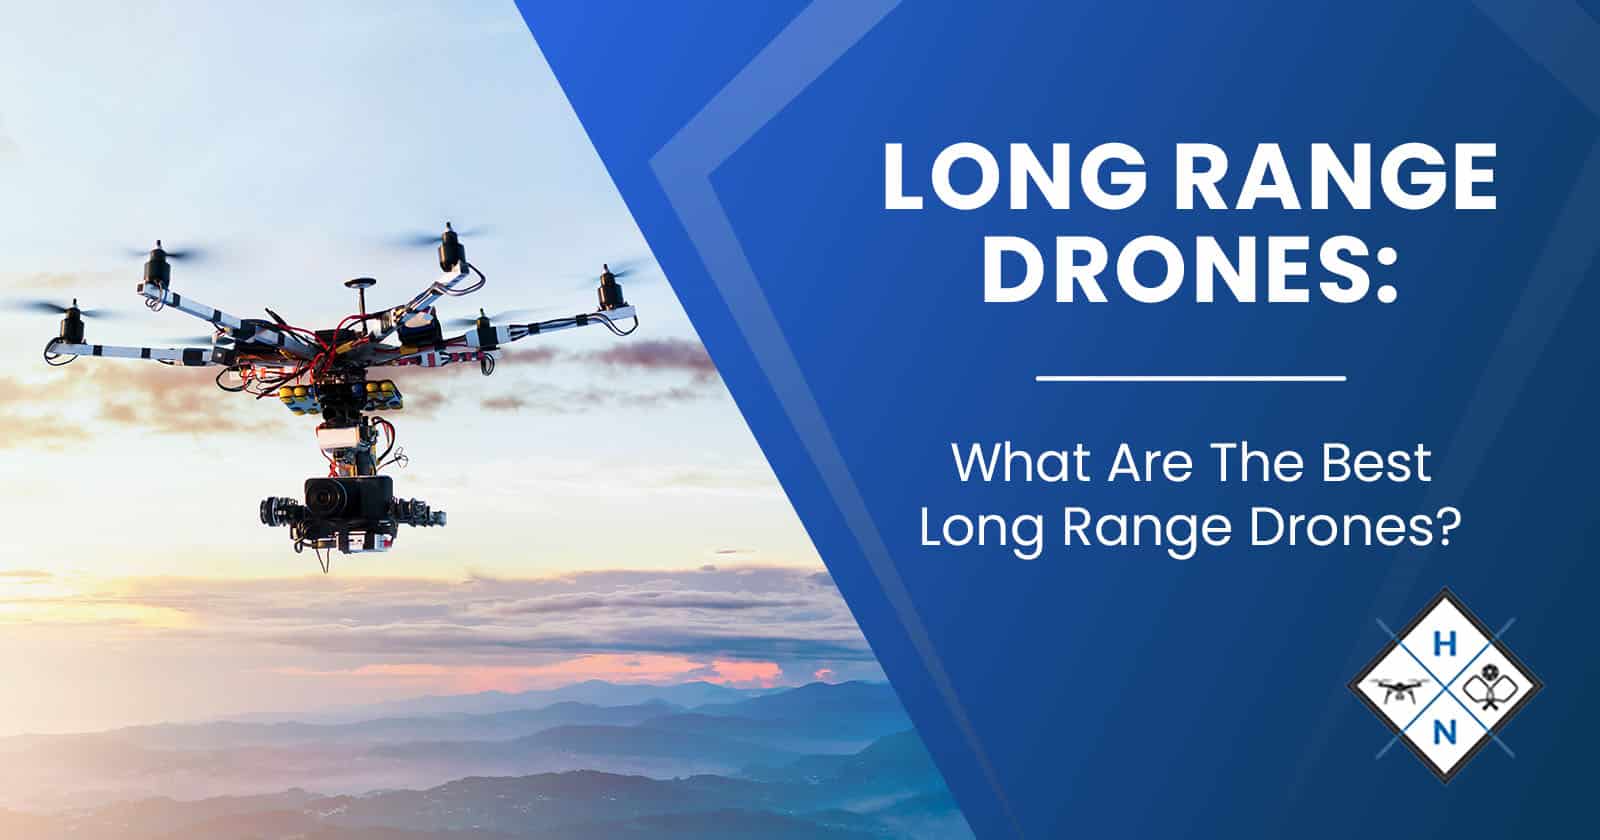 Long Range Drones: What Are The Best Long Range Drones?